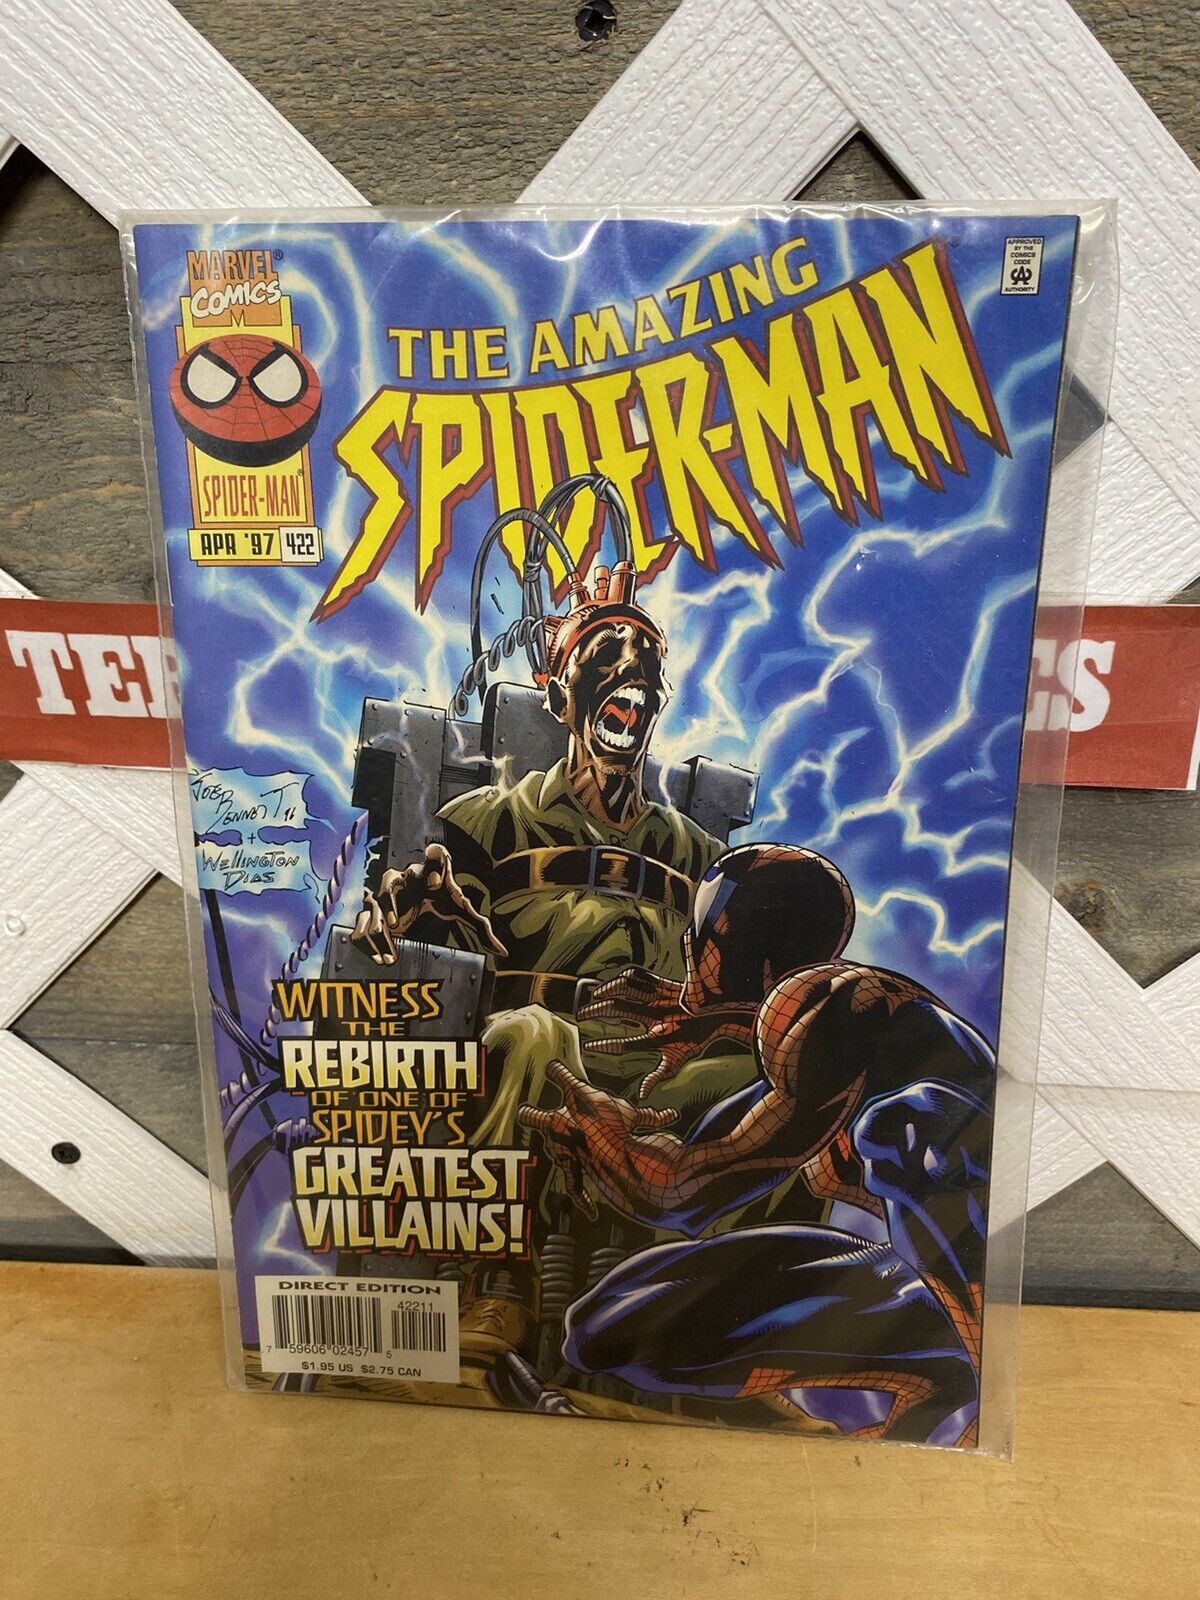 The Amazing Spider-Man #422 (Marvel Comics April 1997)